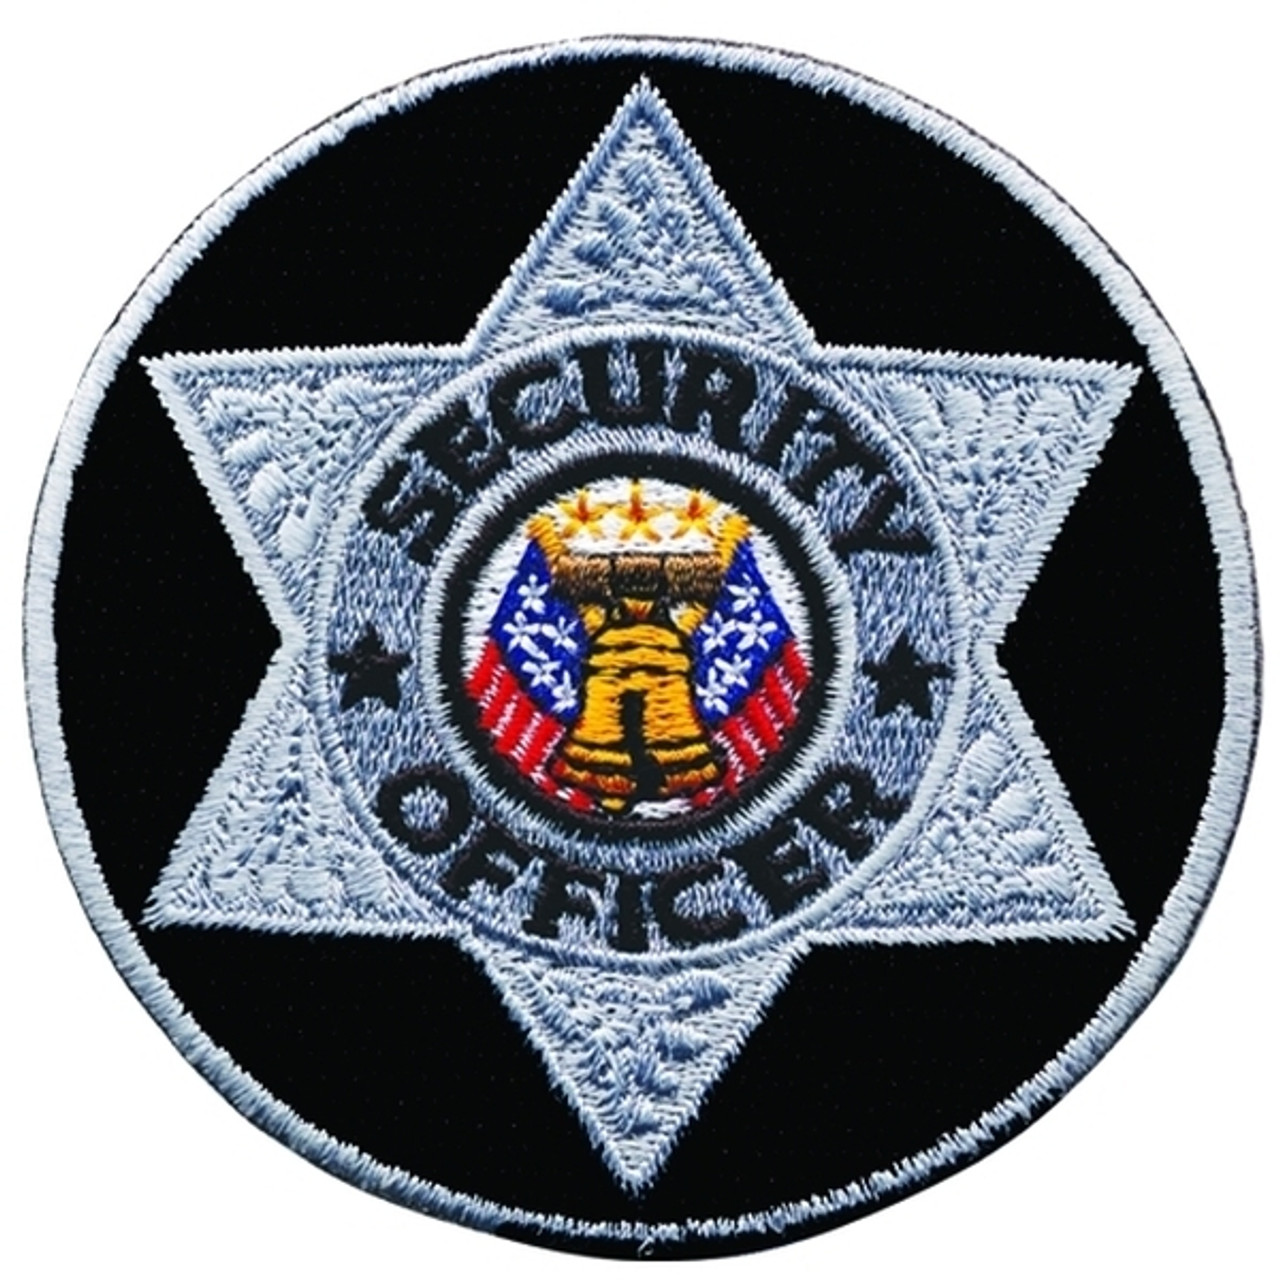 SECURITY OFFICER Badge Patch, Silver/Black, 3 Circle - Emblem